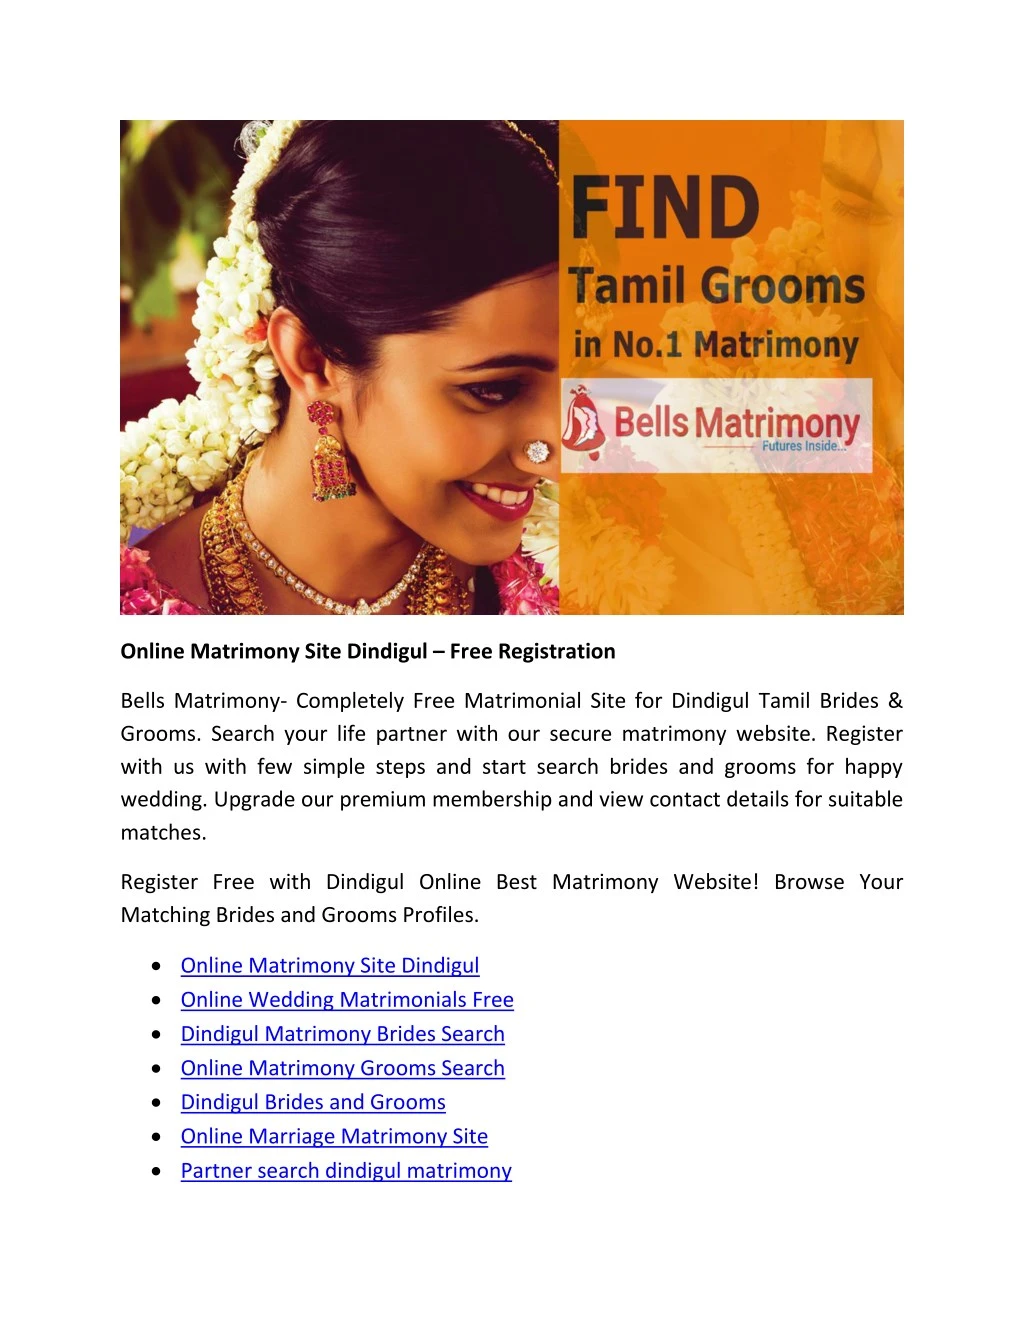 online matrimony site dindigul free registration